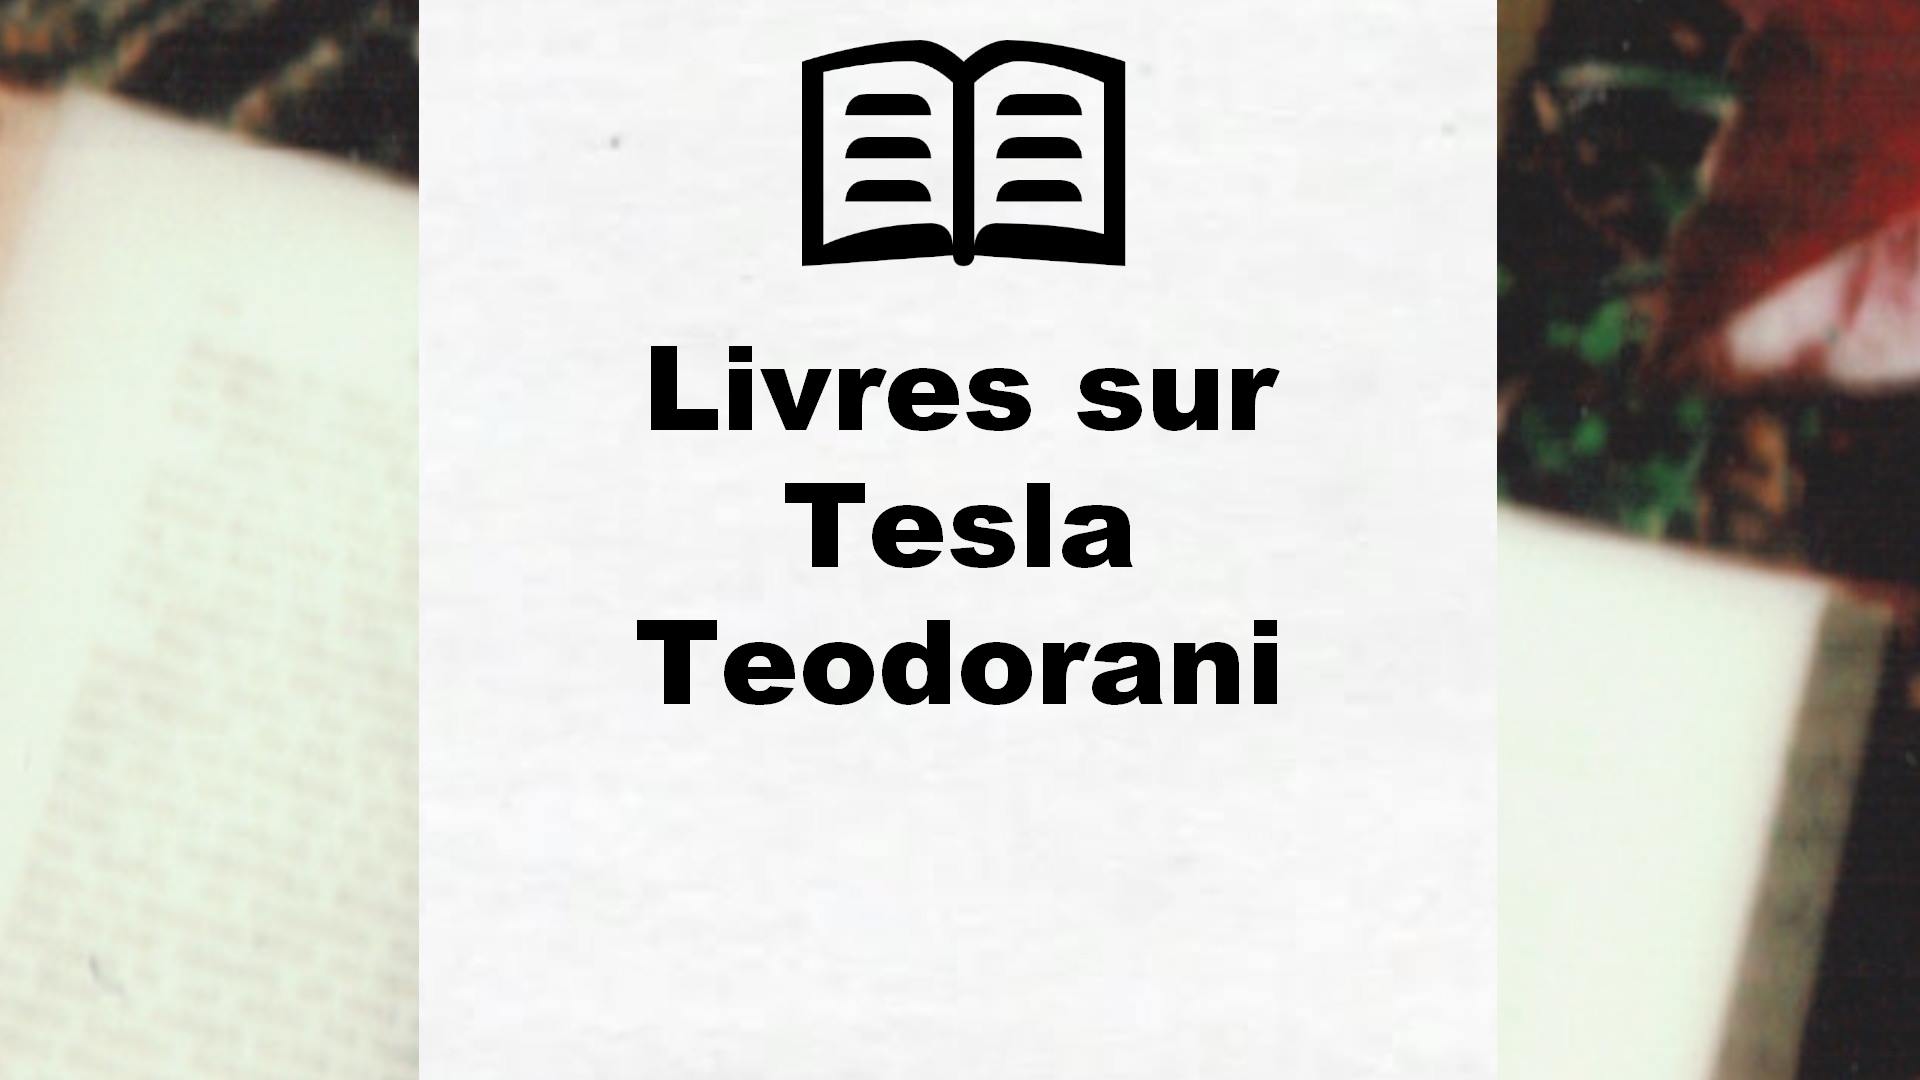 Livres sur Tesla Teodorani